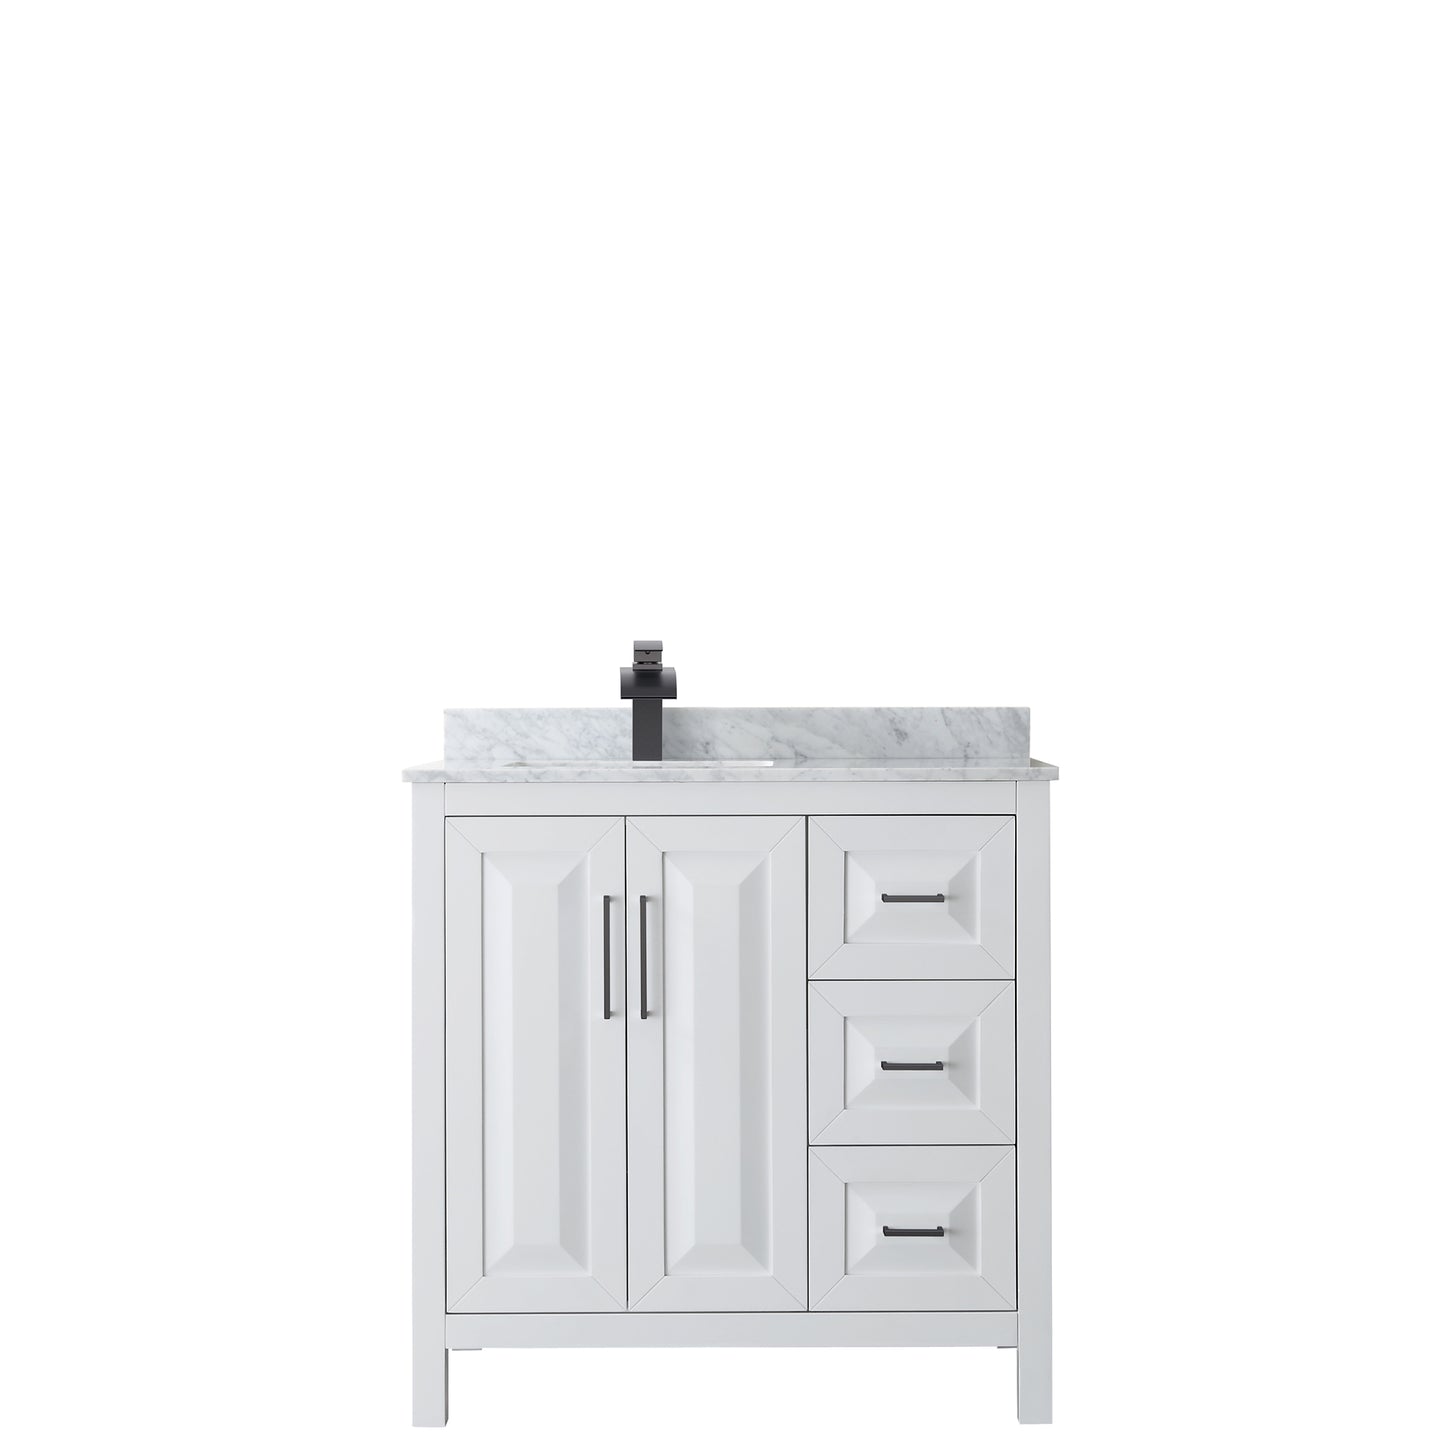 Wyndham Daria 36 Inch Single Bathroom Vanity White Carrara Marble Countertop with Undermount Square Sink in Matte Black Trim - Luxe Bathroom Vanities